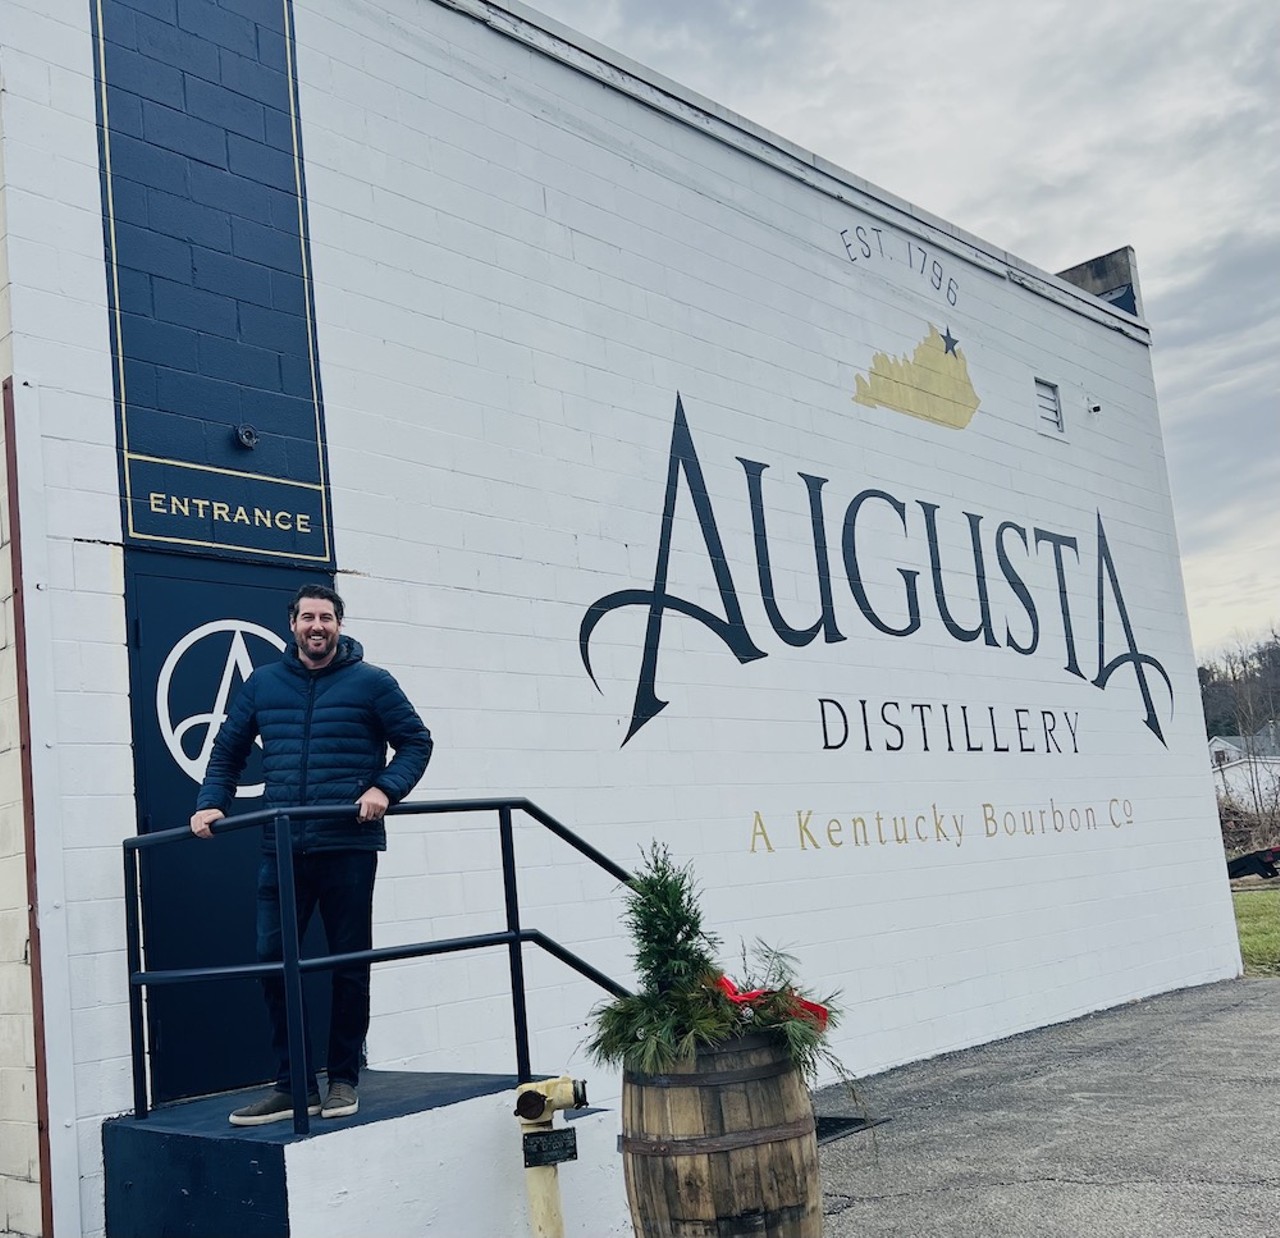 CityBeat staff take a tour of Augusta Distillery.